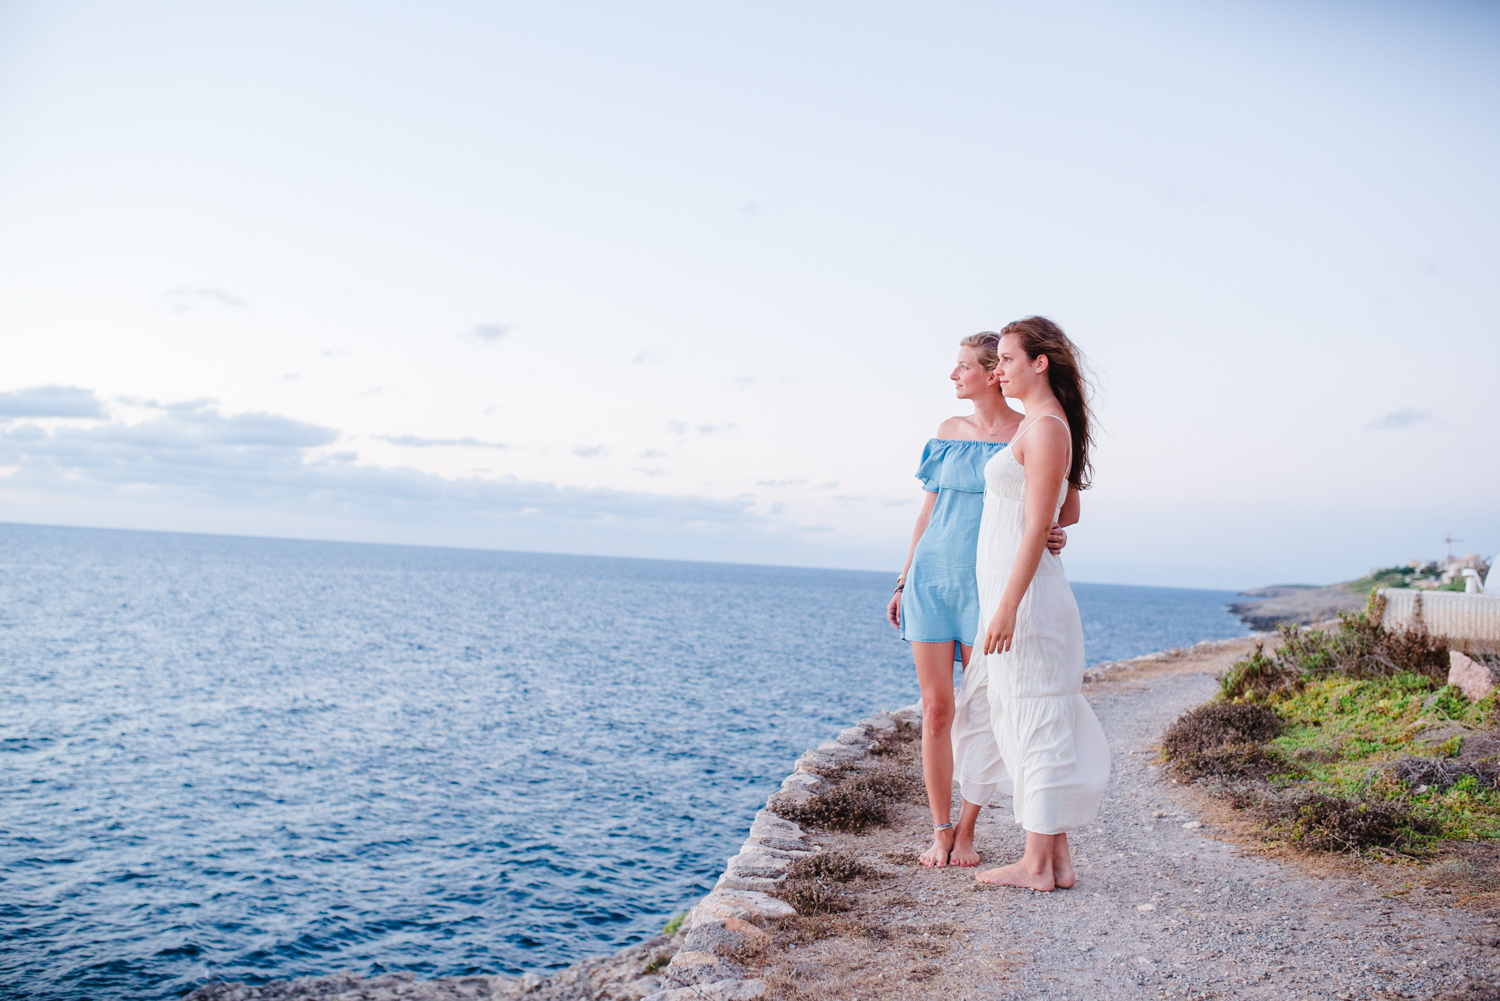 #Mallorca #Urlaub #Strand #Fotografie #Outdoorshootings #Familienshooting #Meer #Sonne #Zwickau #Familienfotograf #SandyScharpFotografie #einzigartig #Erinnerungen #Sachsen #Fotostudio #Fotoatelier